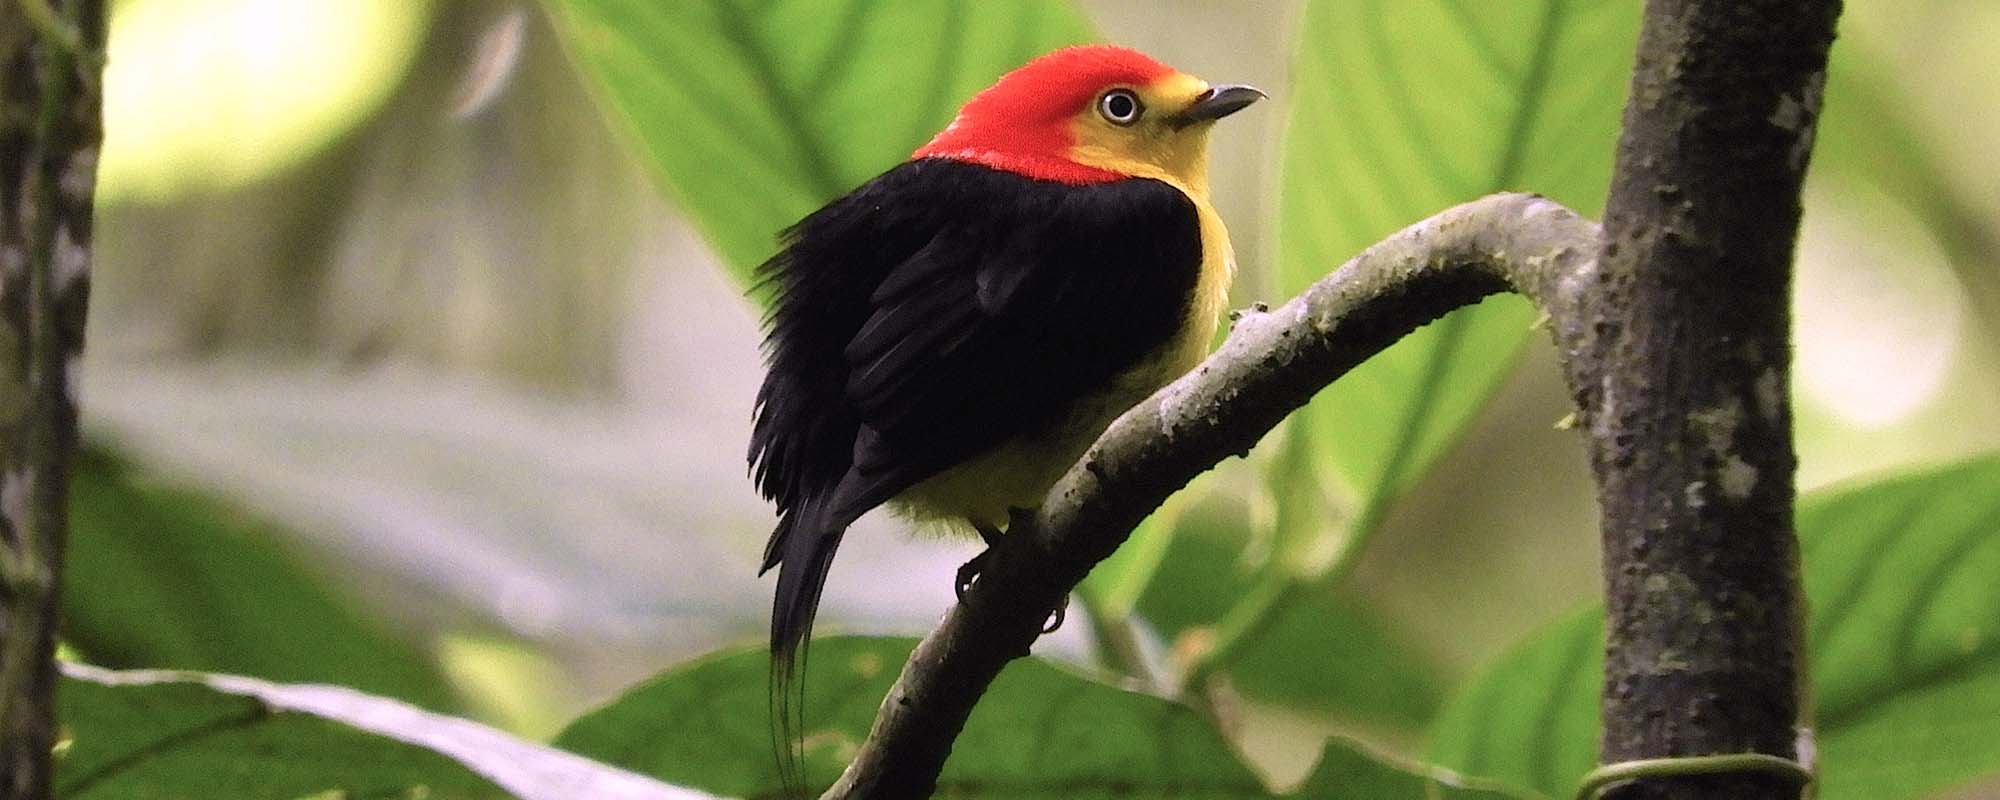 Wire-tailed Manakin Field Guides Birding Tours Ecuador